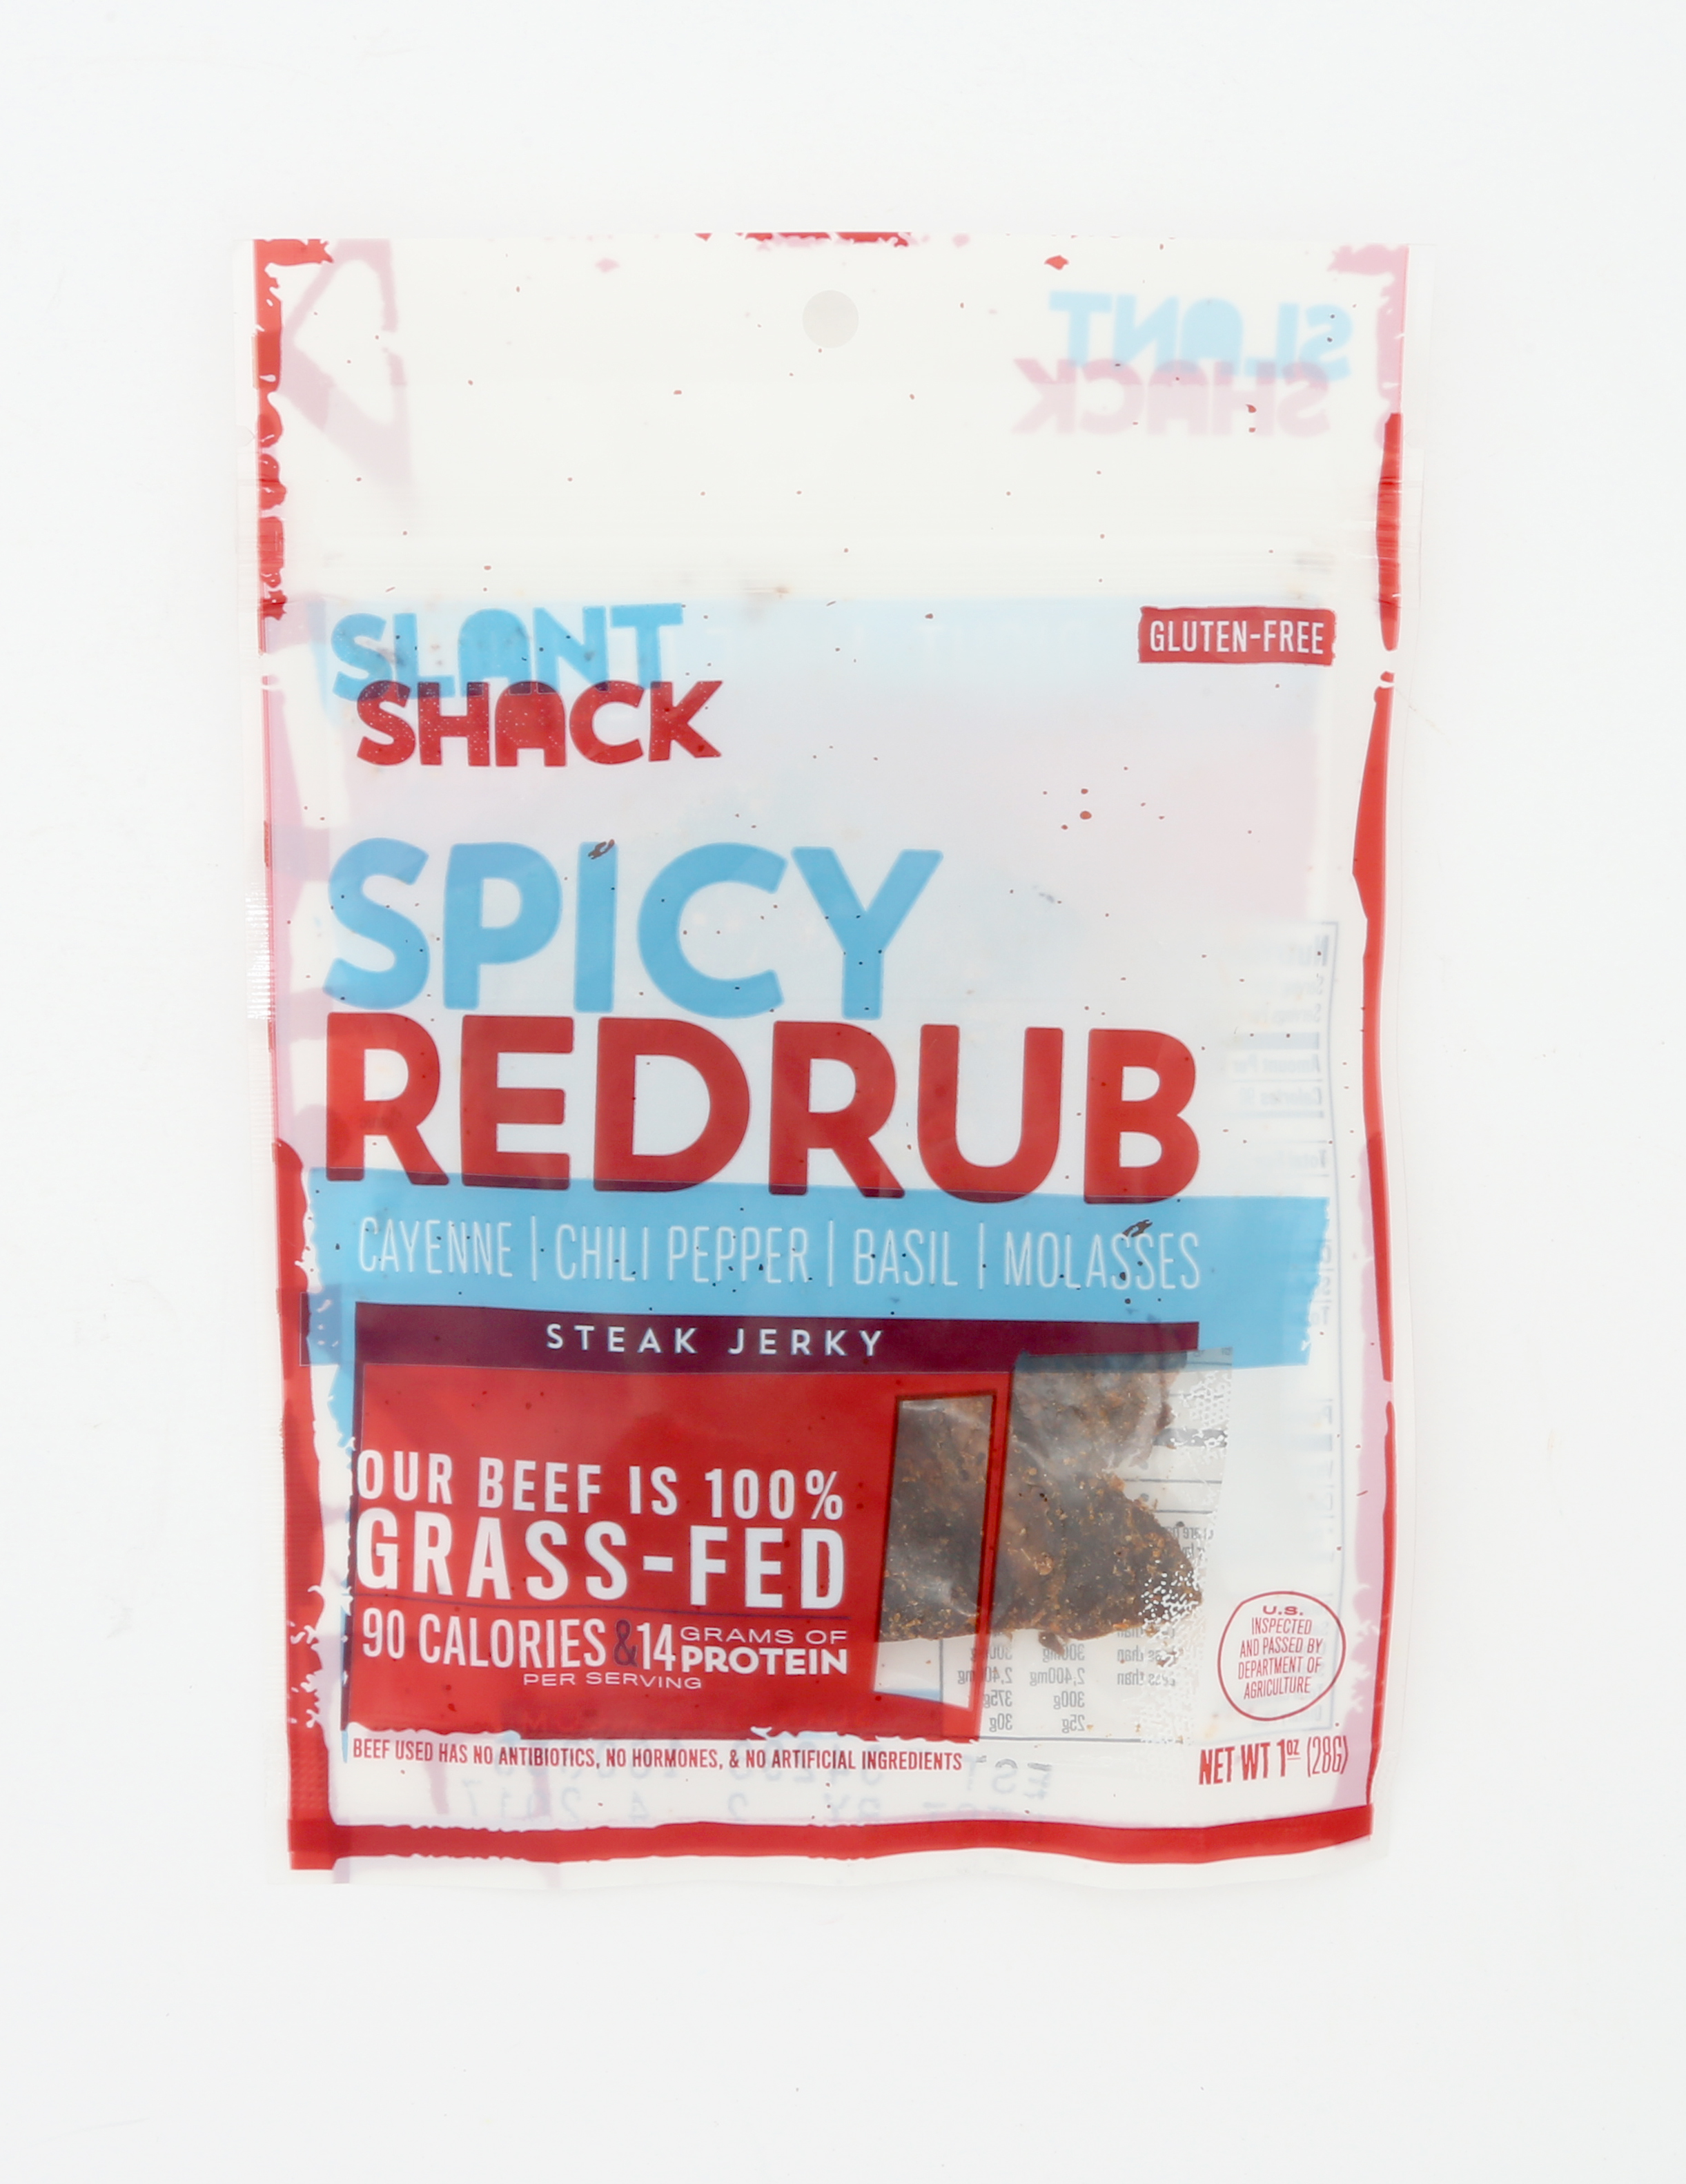 Spicy Redrub (1 oz)